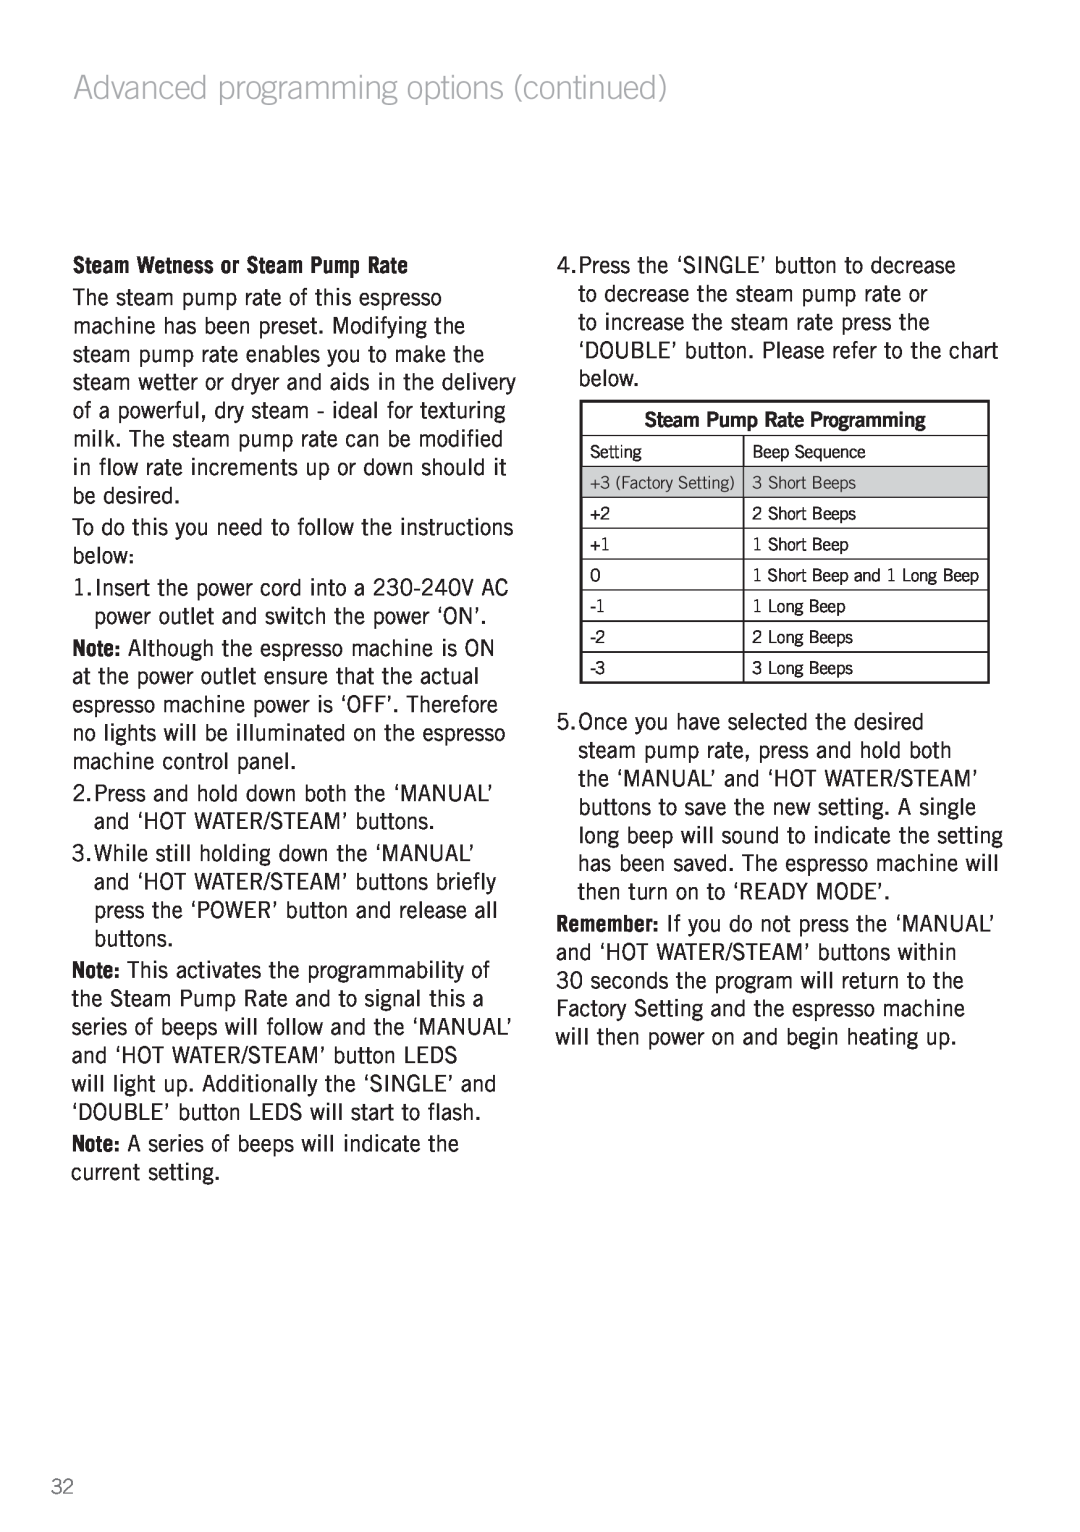 Sunbeam EM6200 manual Steam Wetness or Steam Pump Rate, Advanced programming options continued, Steam Pump Rate Programming 